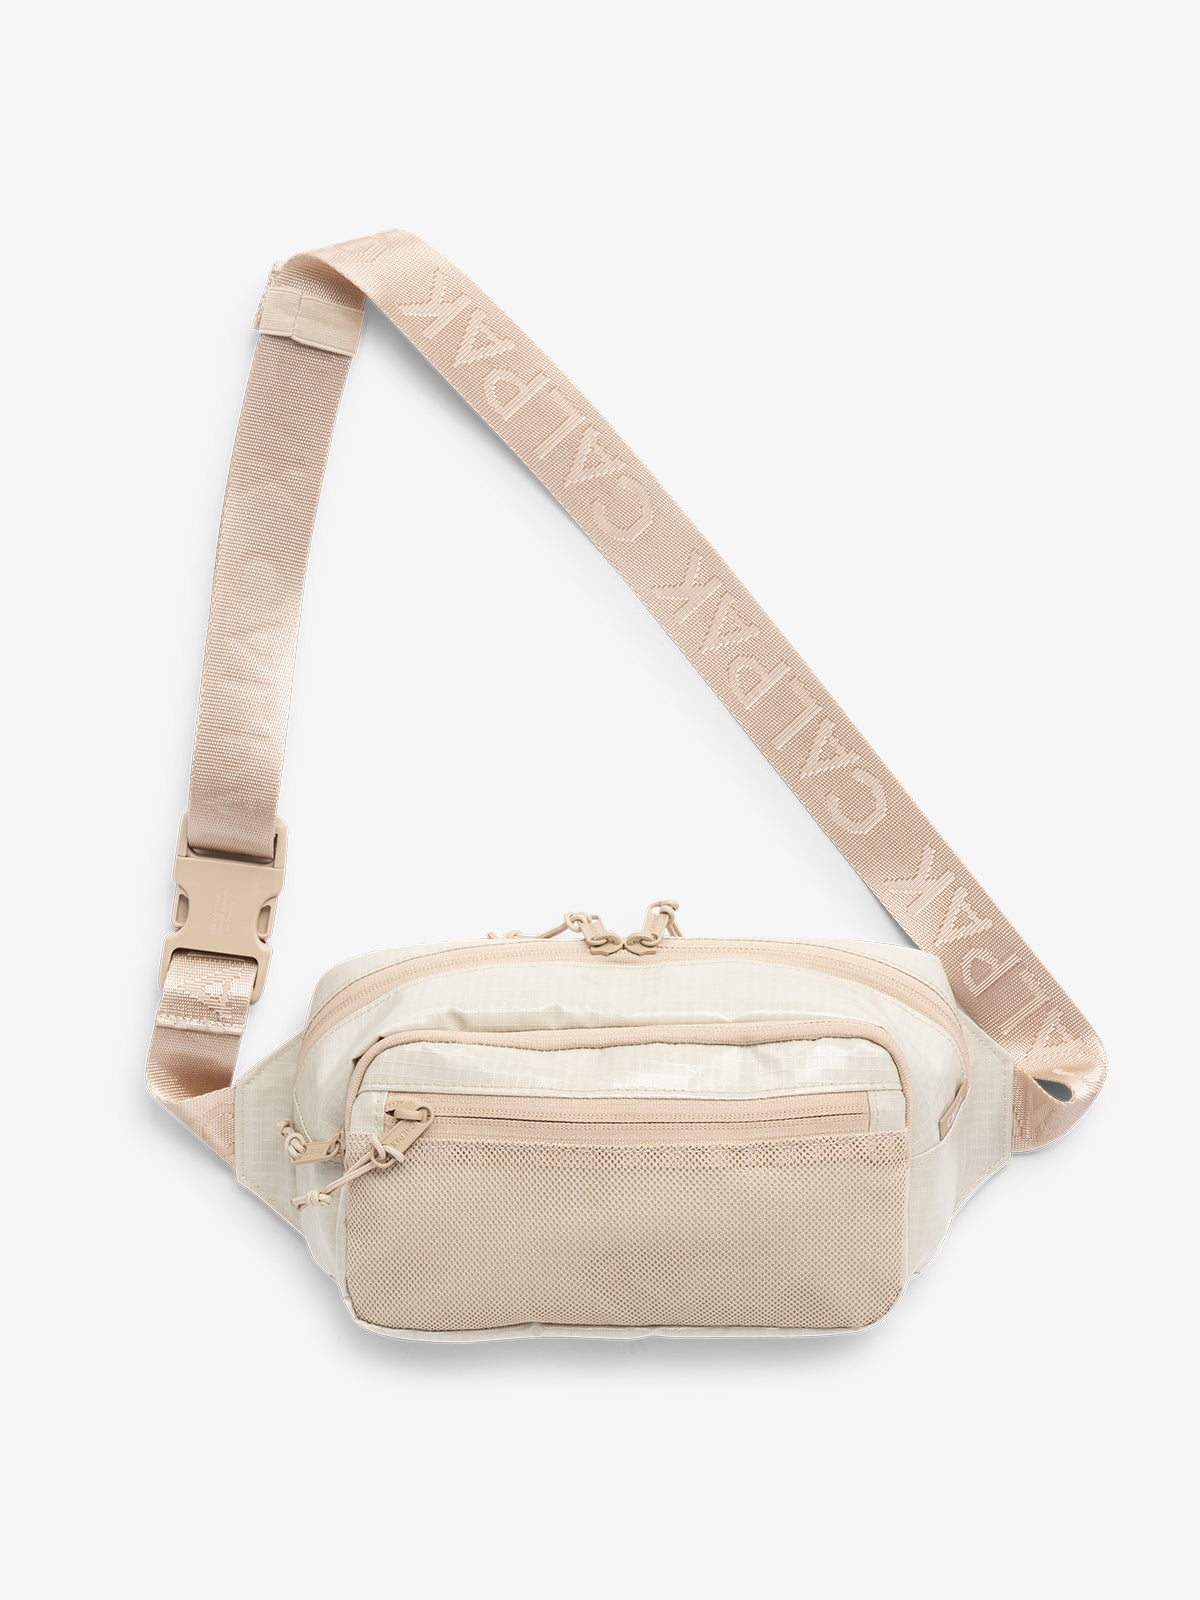 Terra crossbody belt bag with adjustable nylon strap in ivory beige